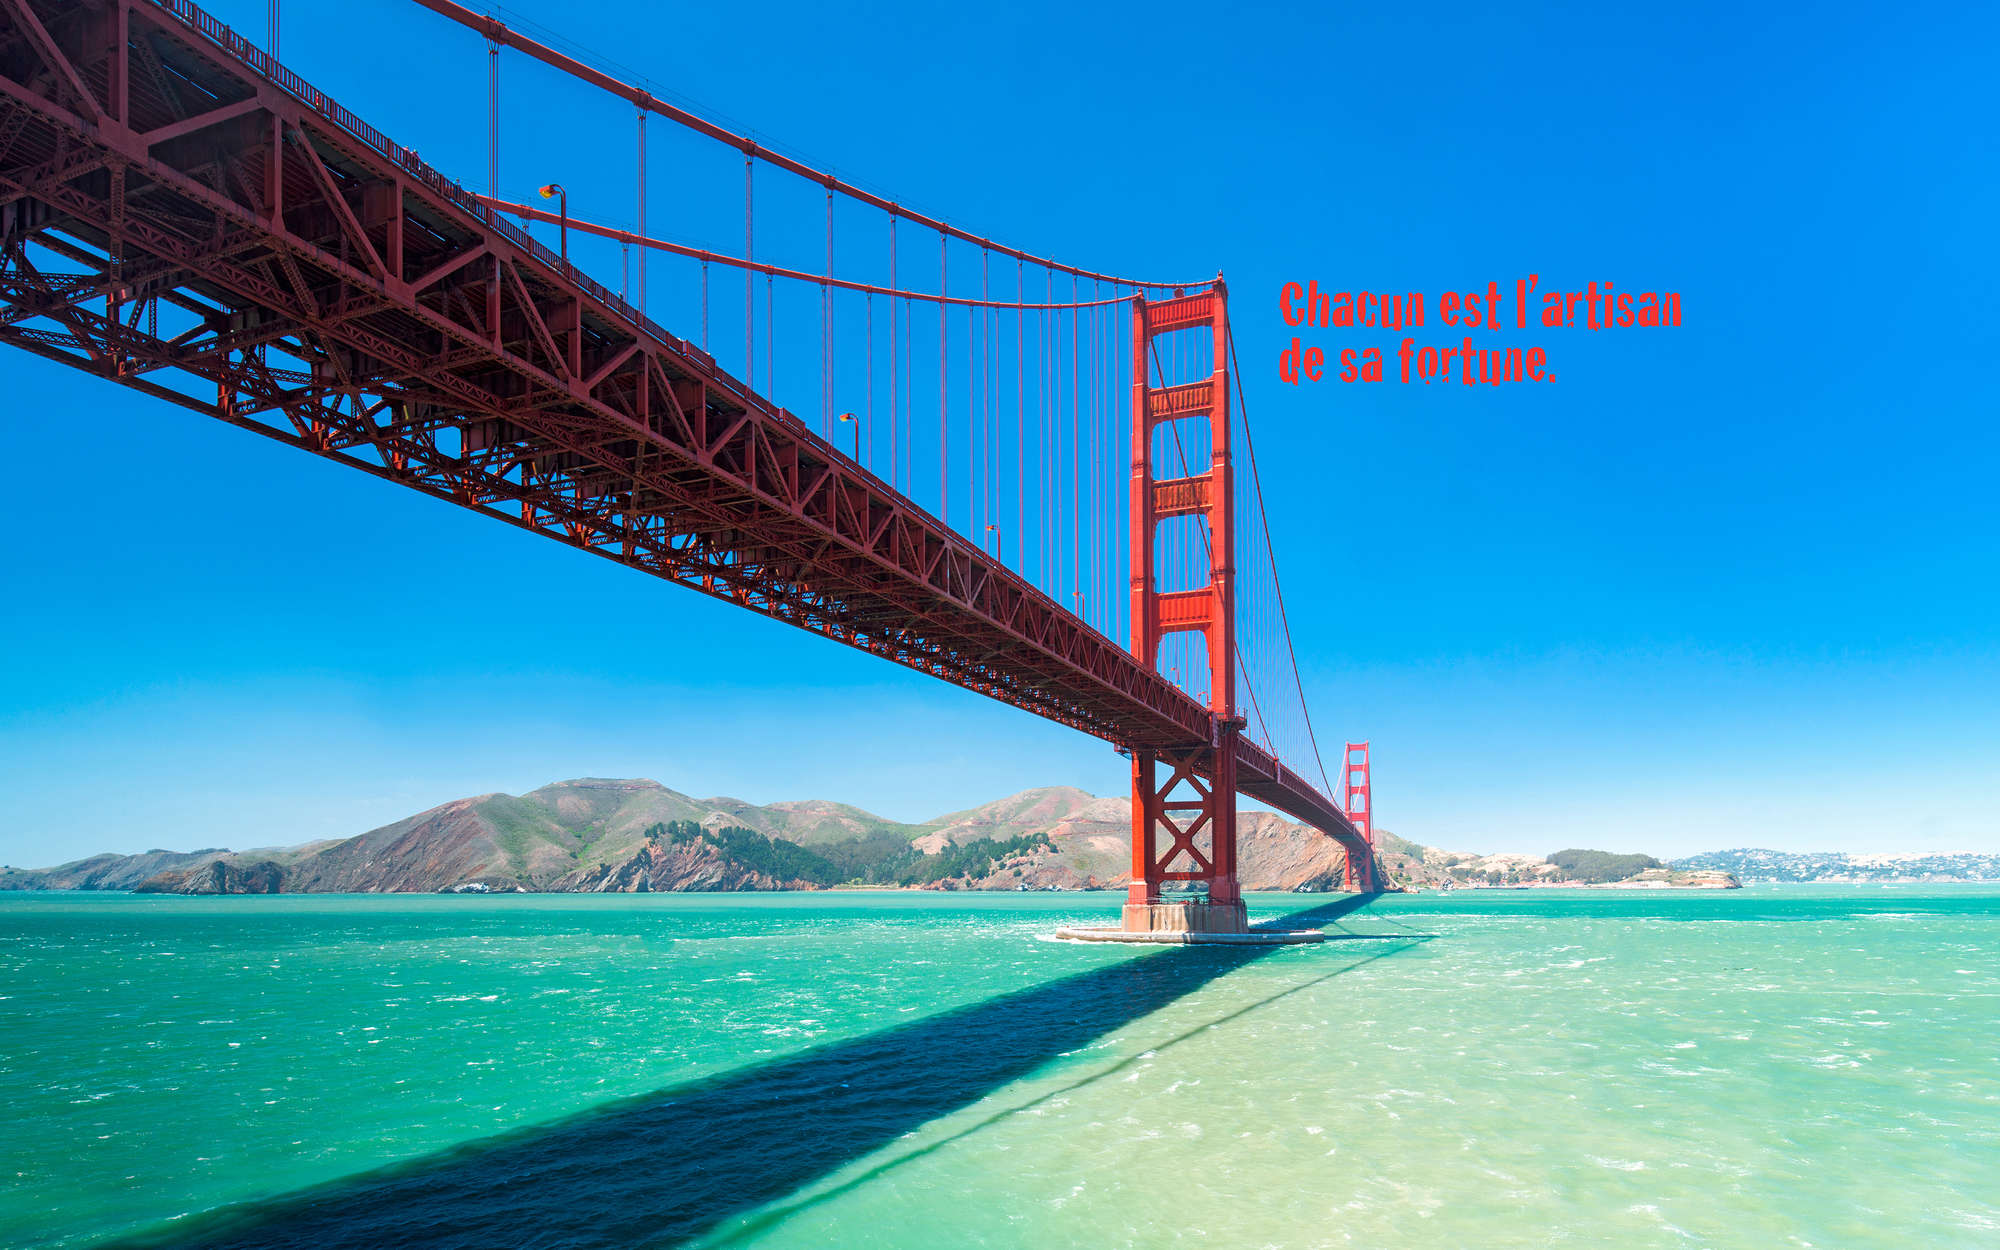             Golden Gate Bridge behang met Franse letters - parelmoer glad vlies
        